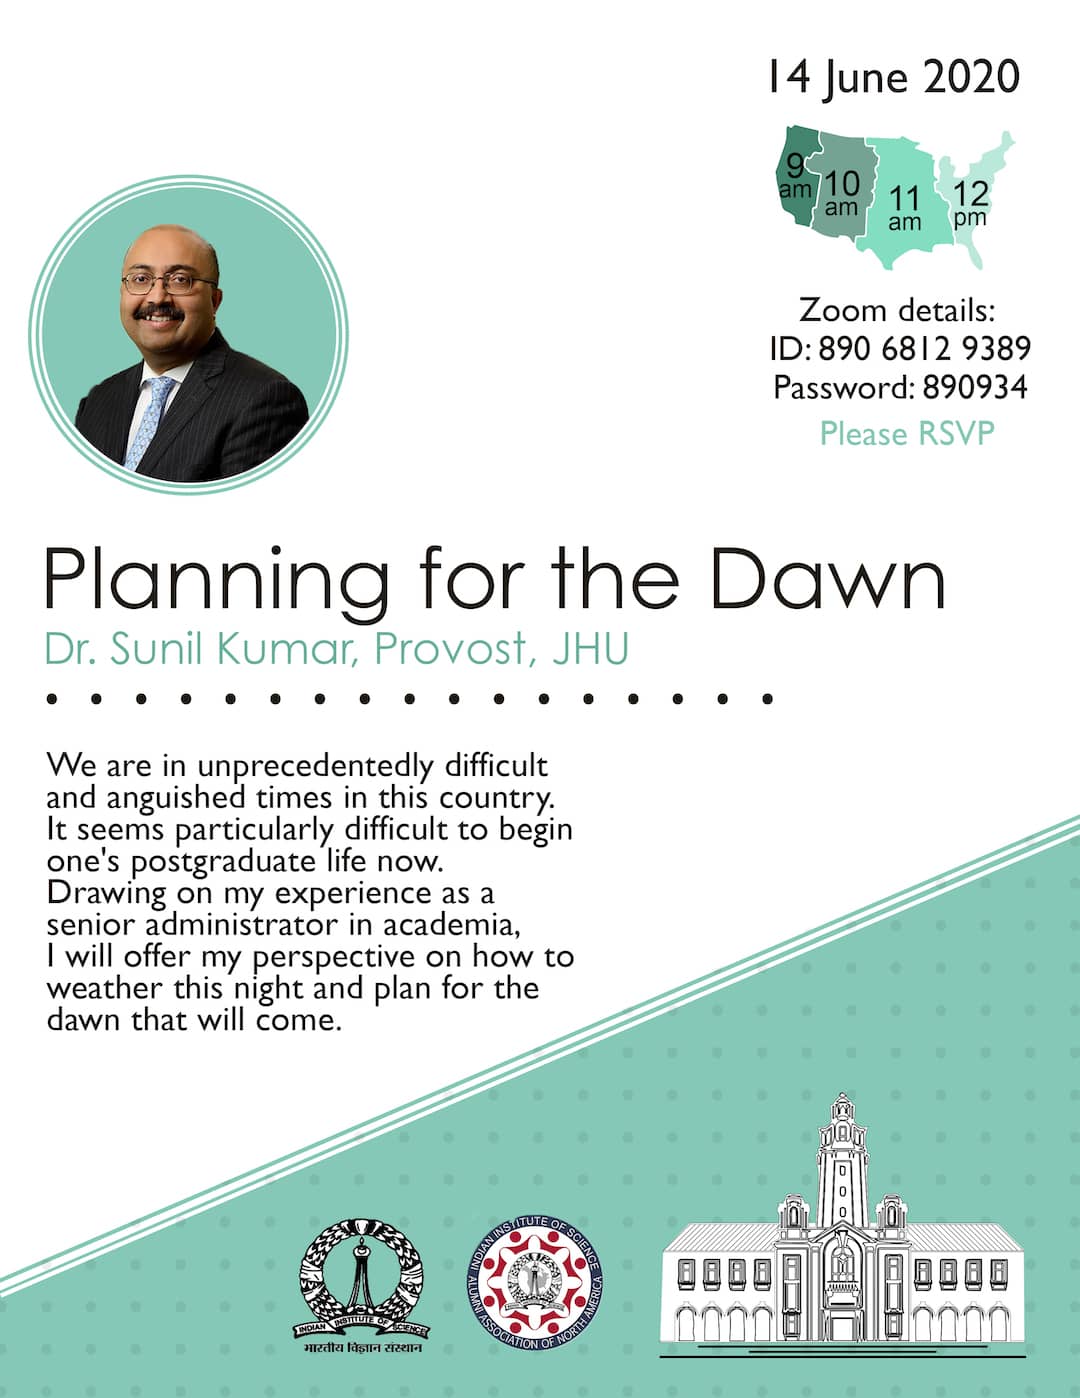 “Planning for the Dawn” – Dr. Sunil Kumar